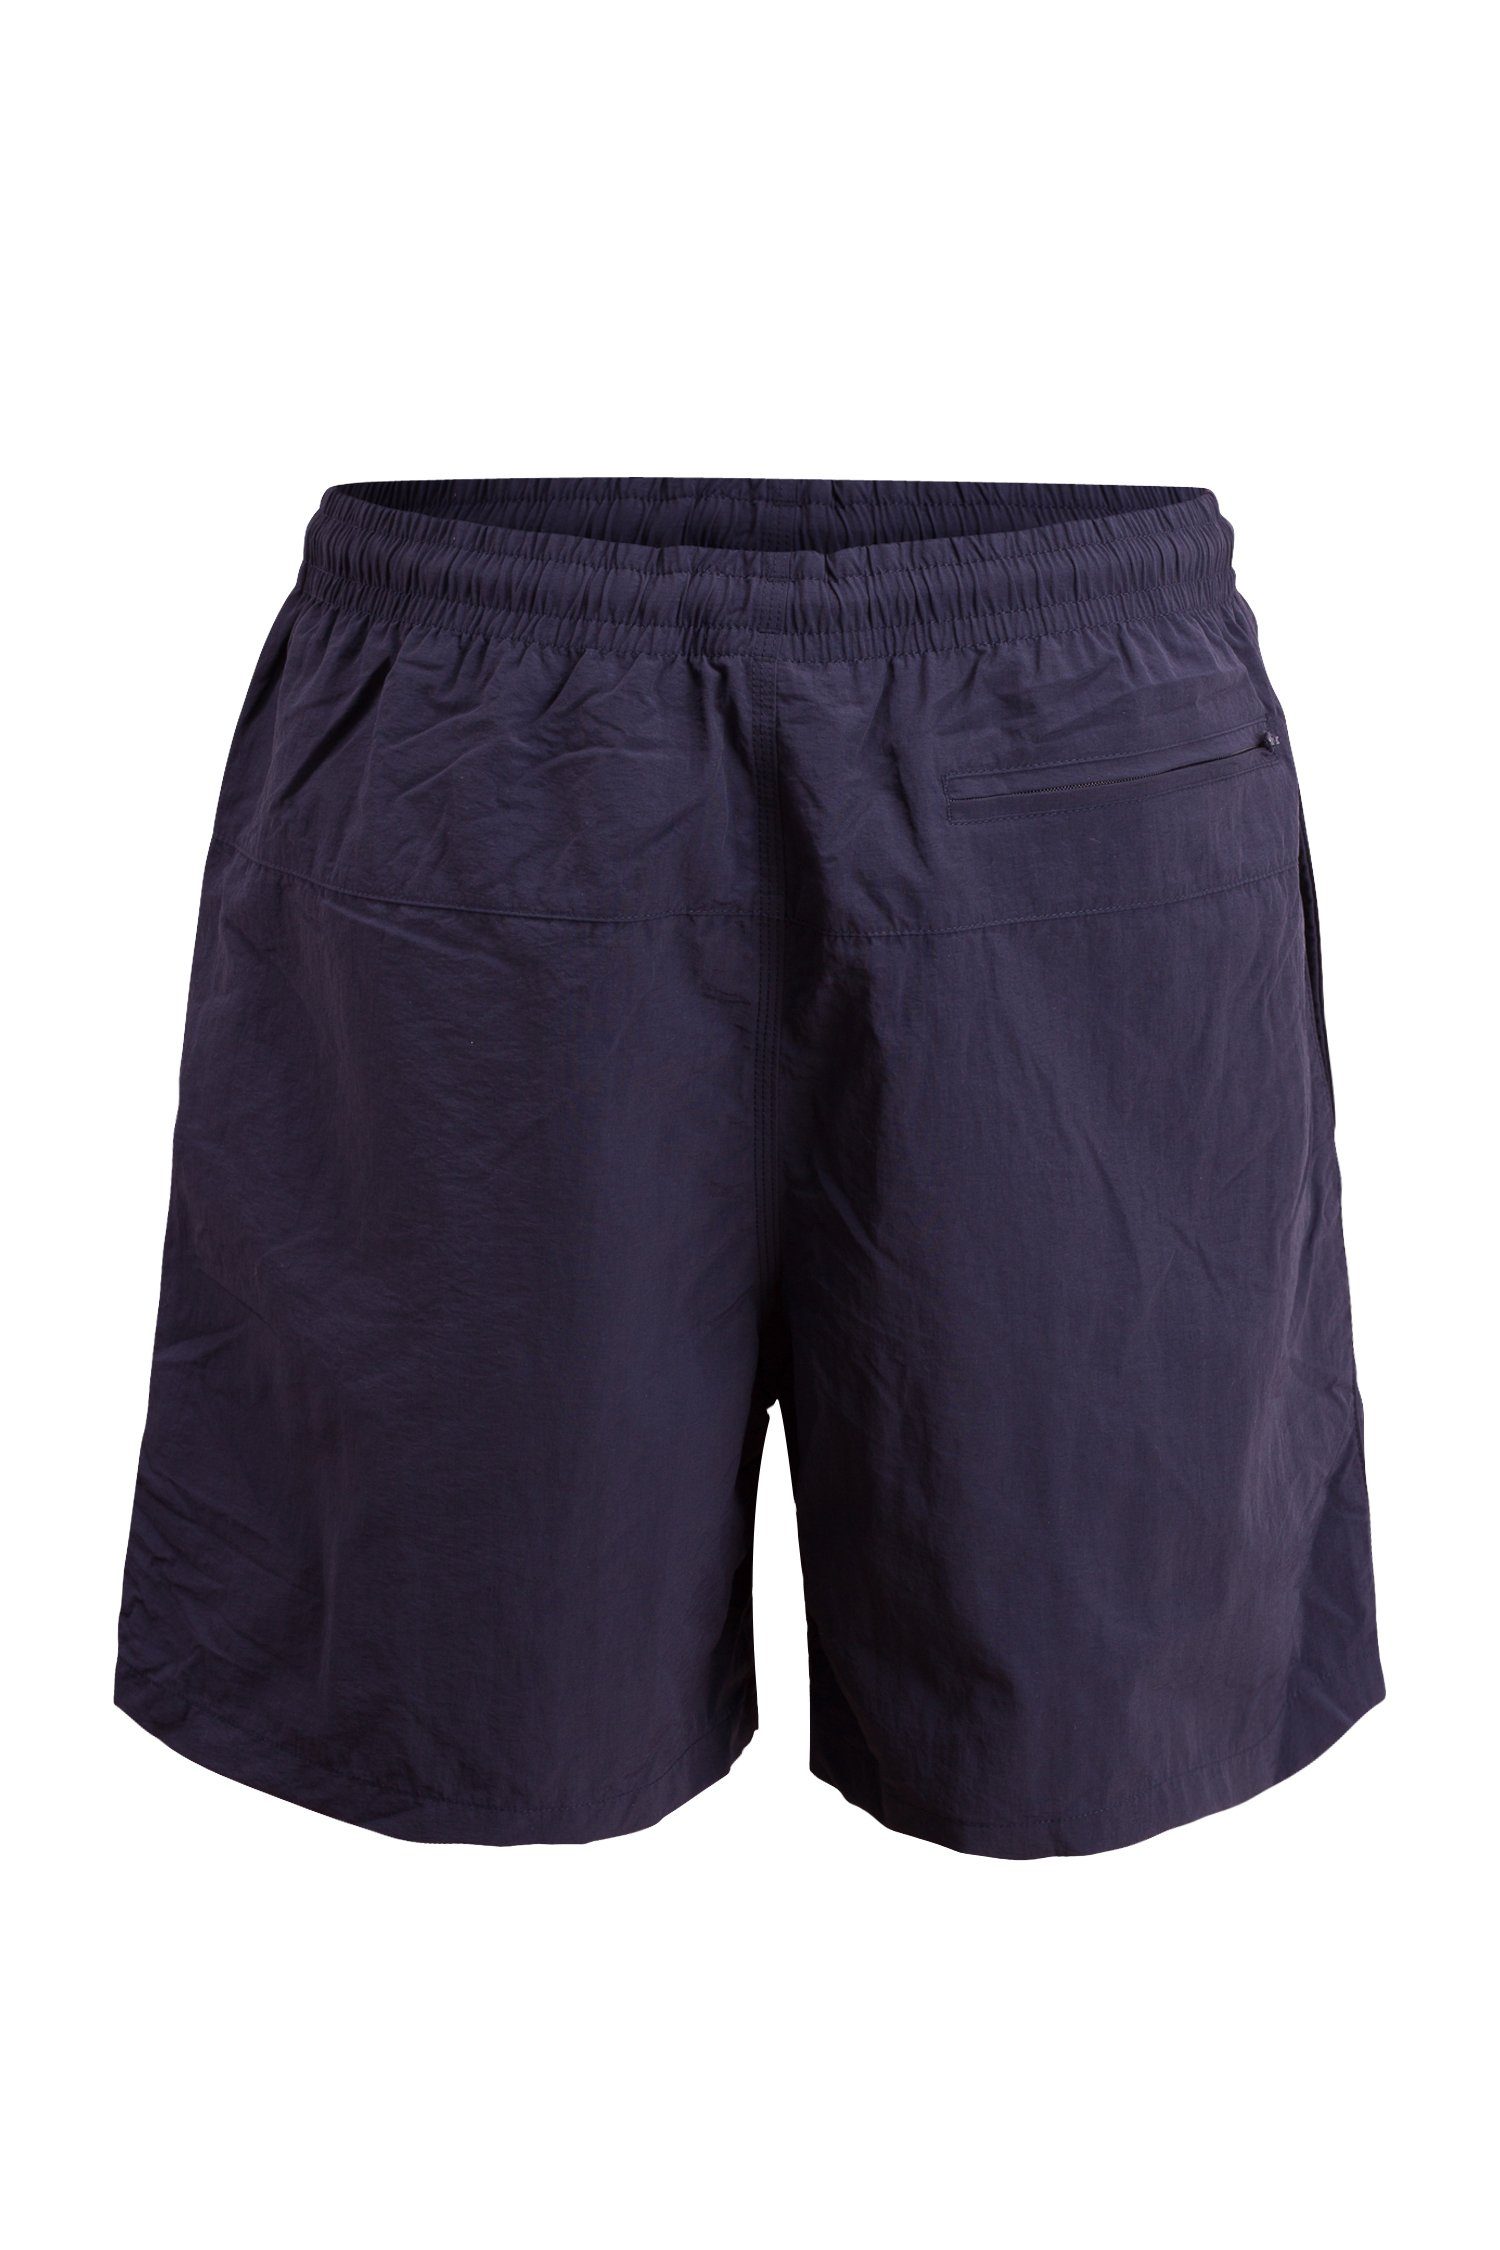 Manufaktur13 Badeshorts Swim Shorts - Navy Badehosen schnelltrocknend